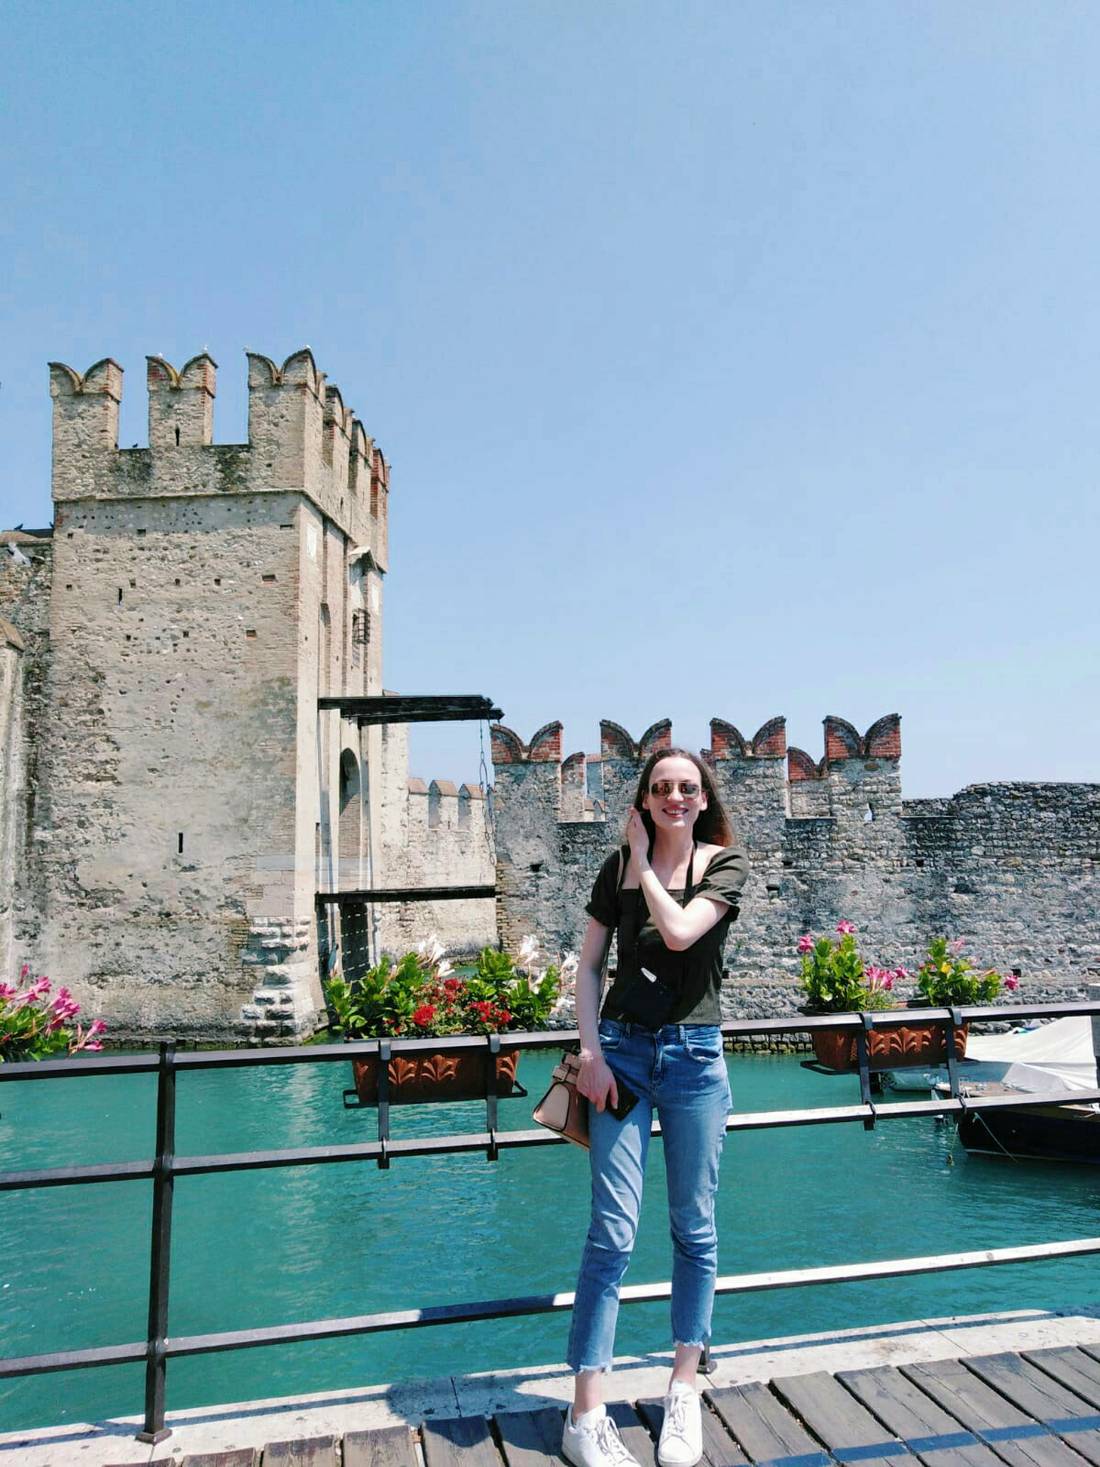 Me on the impressive drawbridge in front of the castle